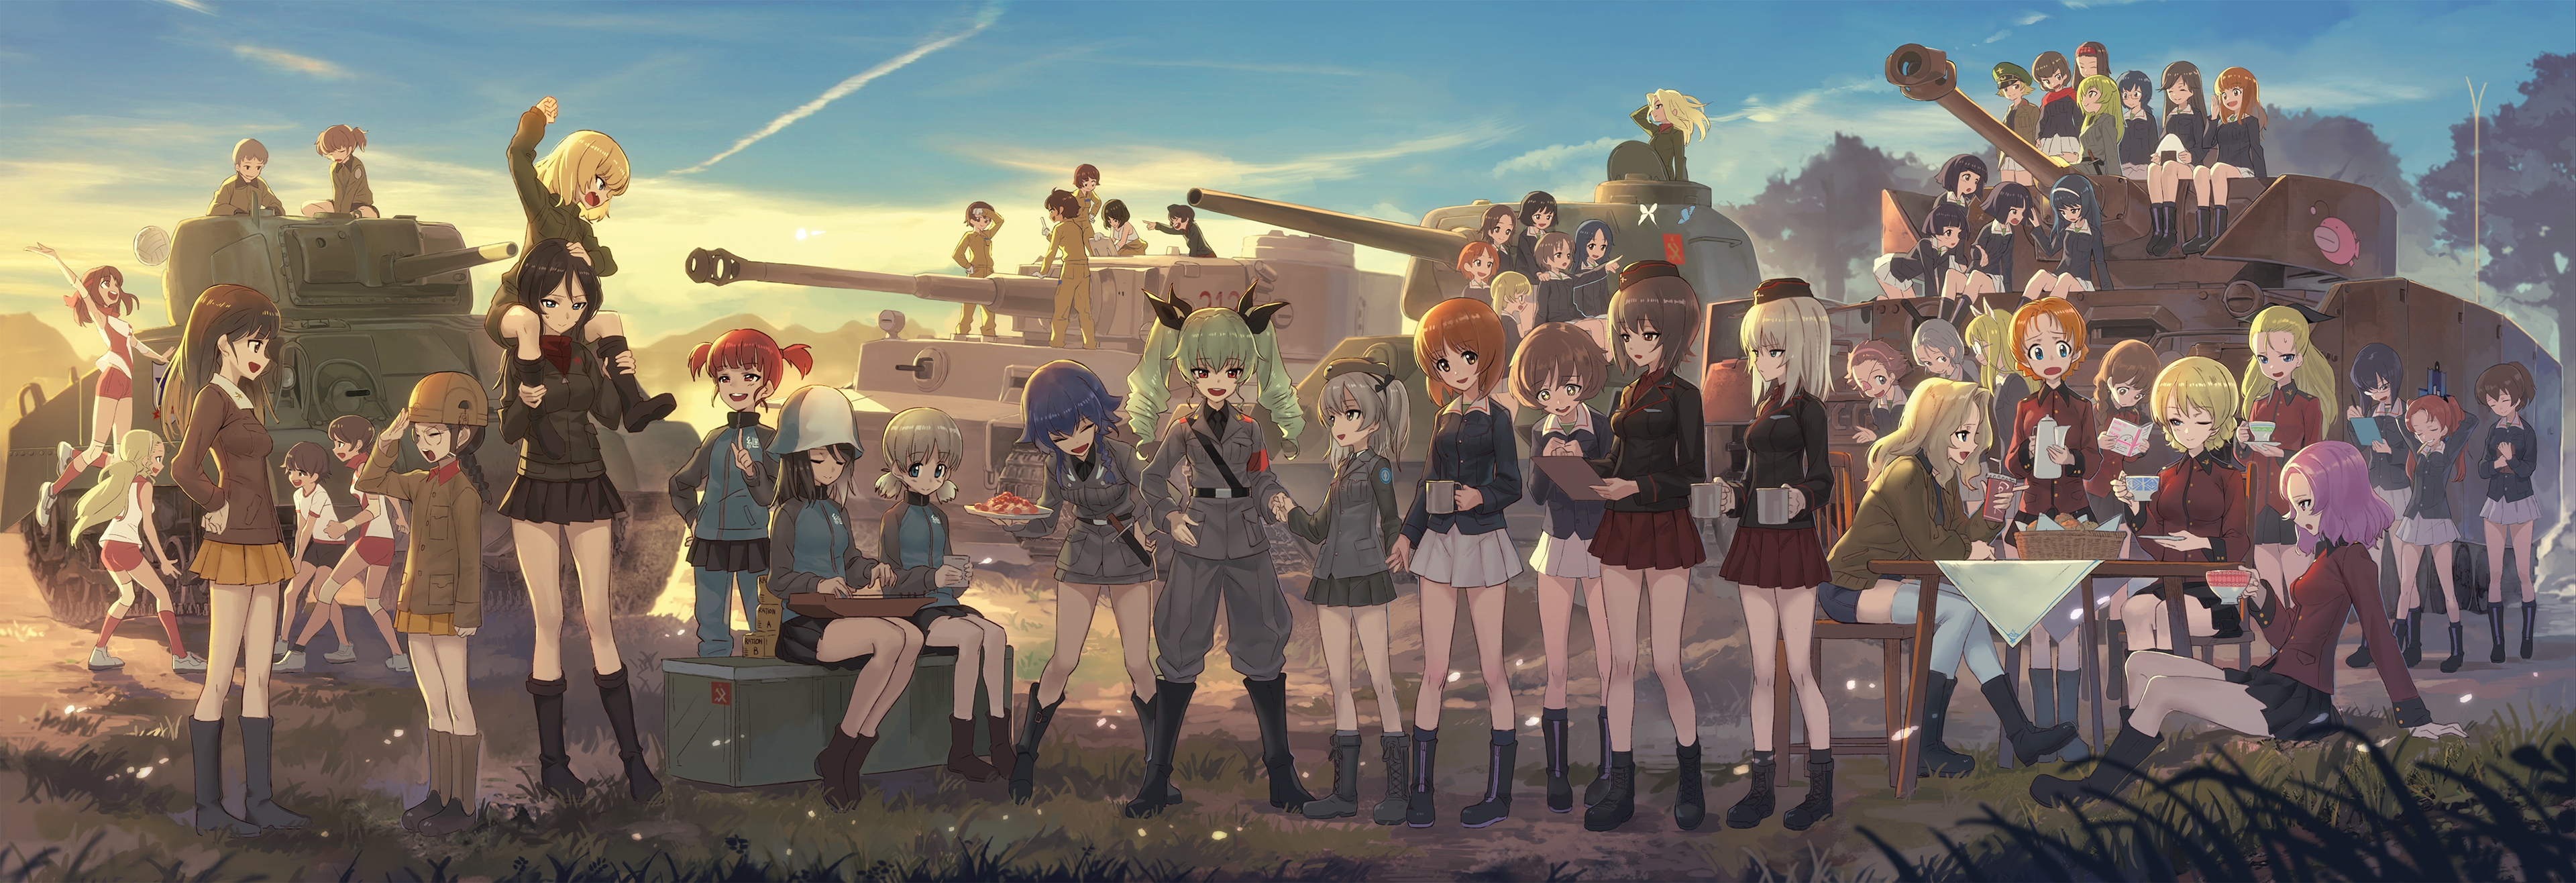 Girls Und Panzer, Anime Girls, Tanks, Military Uniforms - Girl Und Panzer Art , HD Wallpaper & Backgrounds